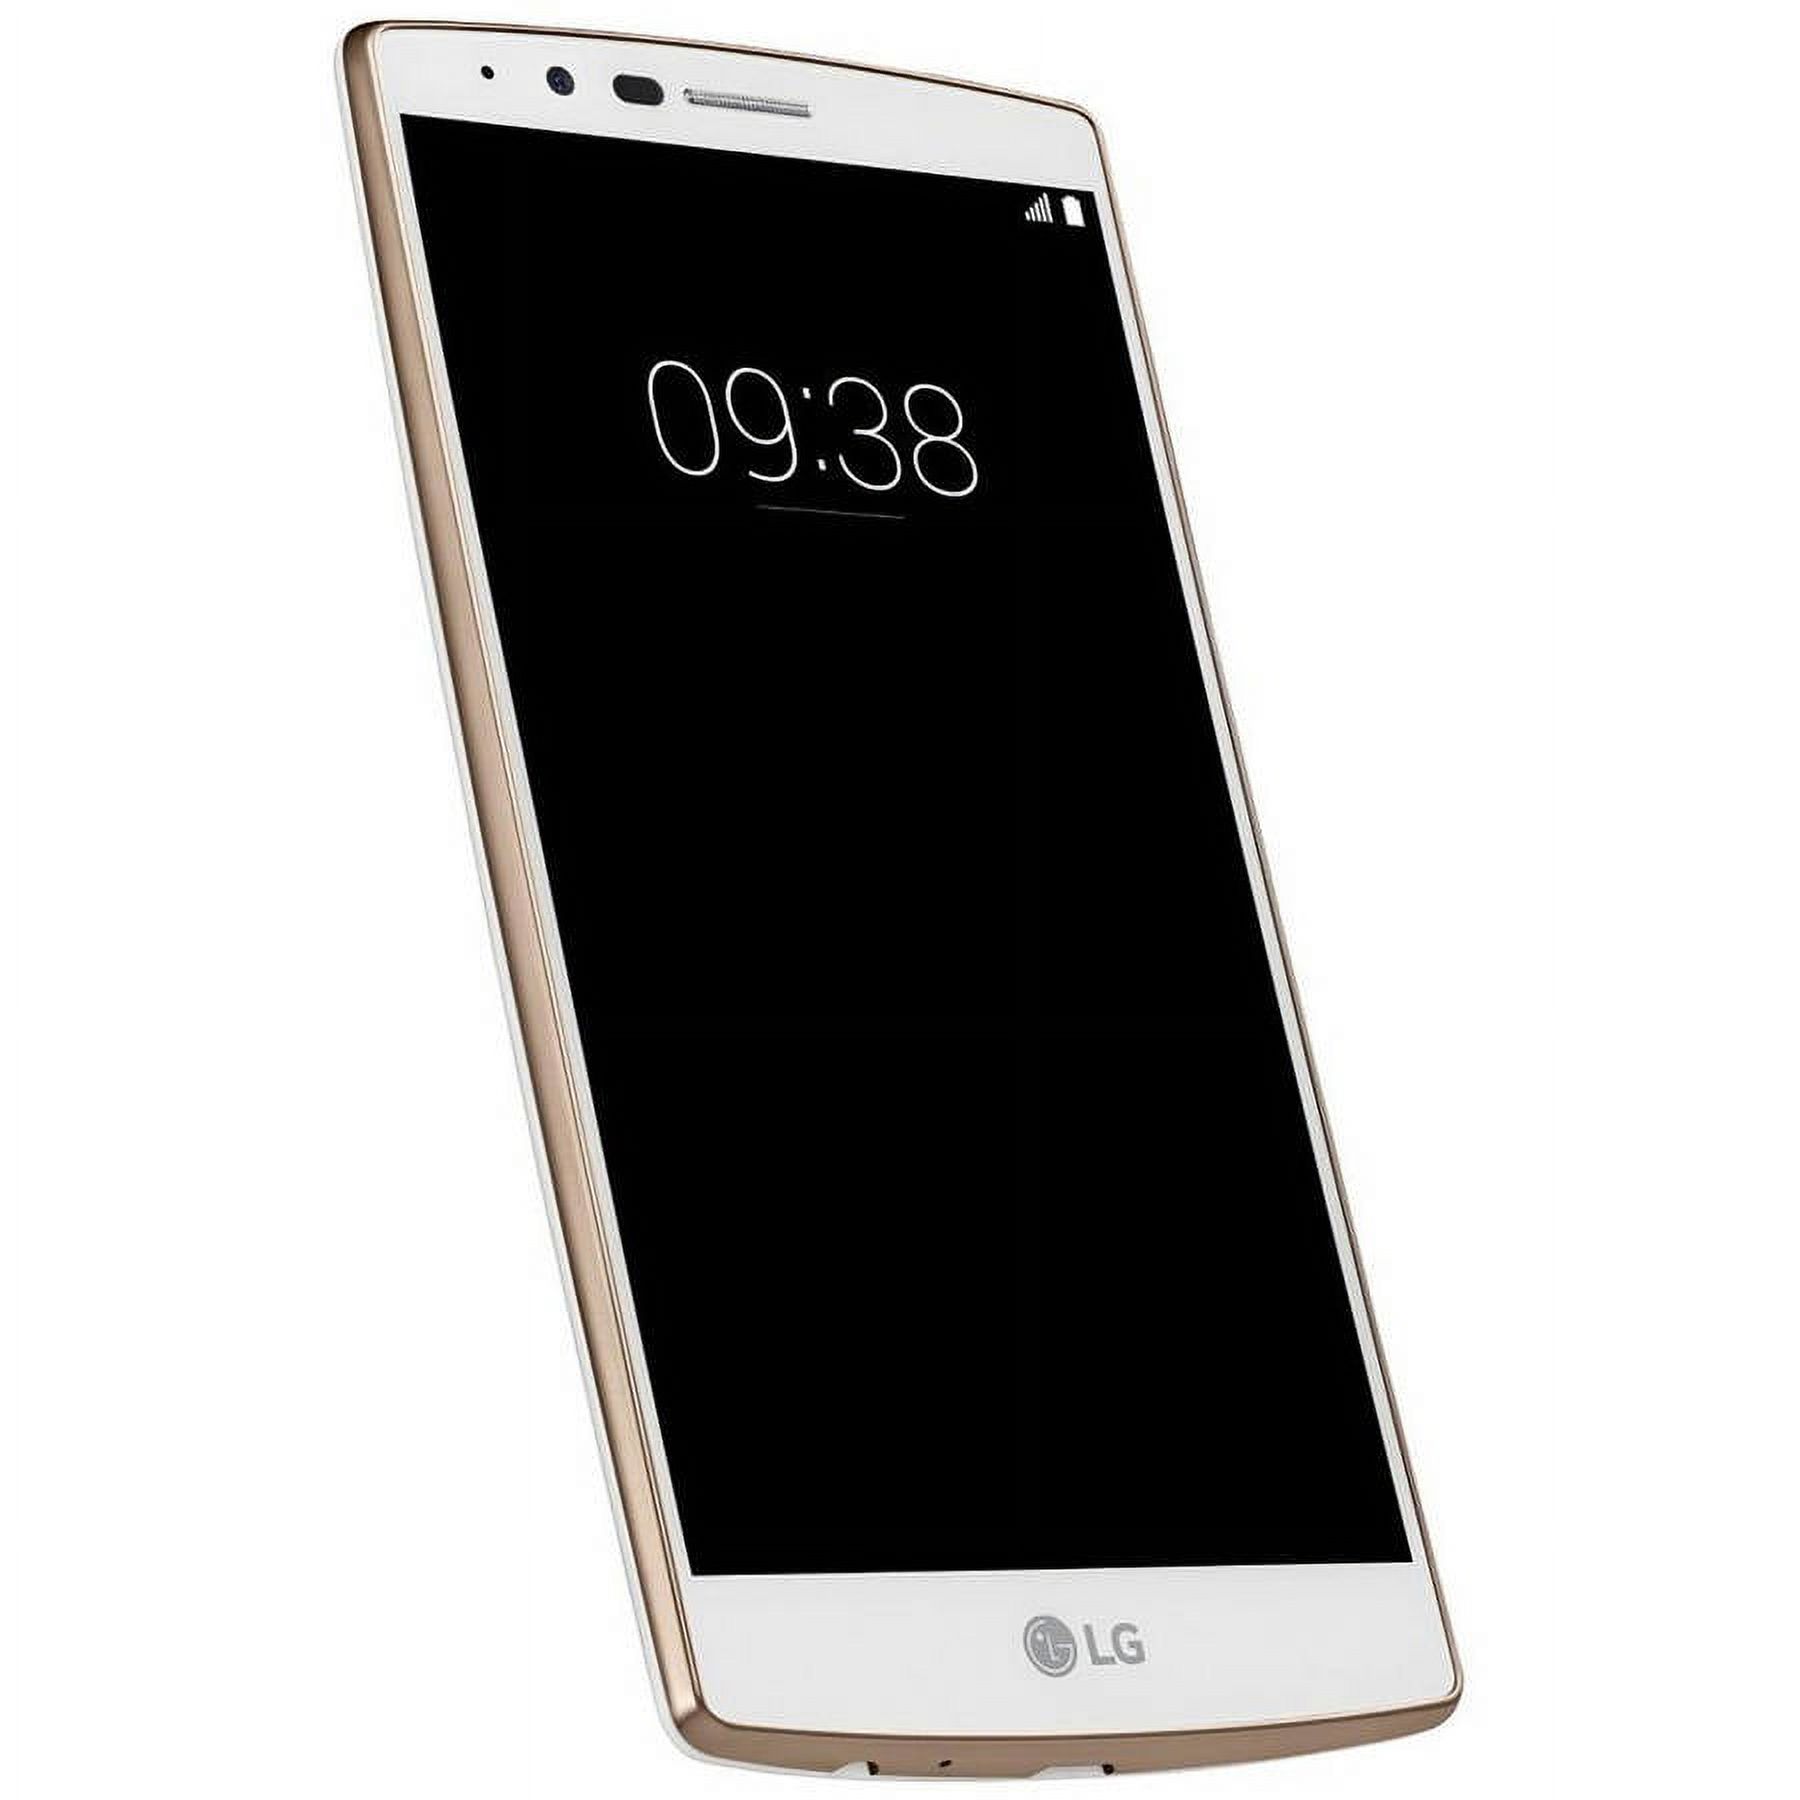 LG G4 H815 32GB GSM Smartphone (Unlocked), White/Gold - image 1 of 3